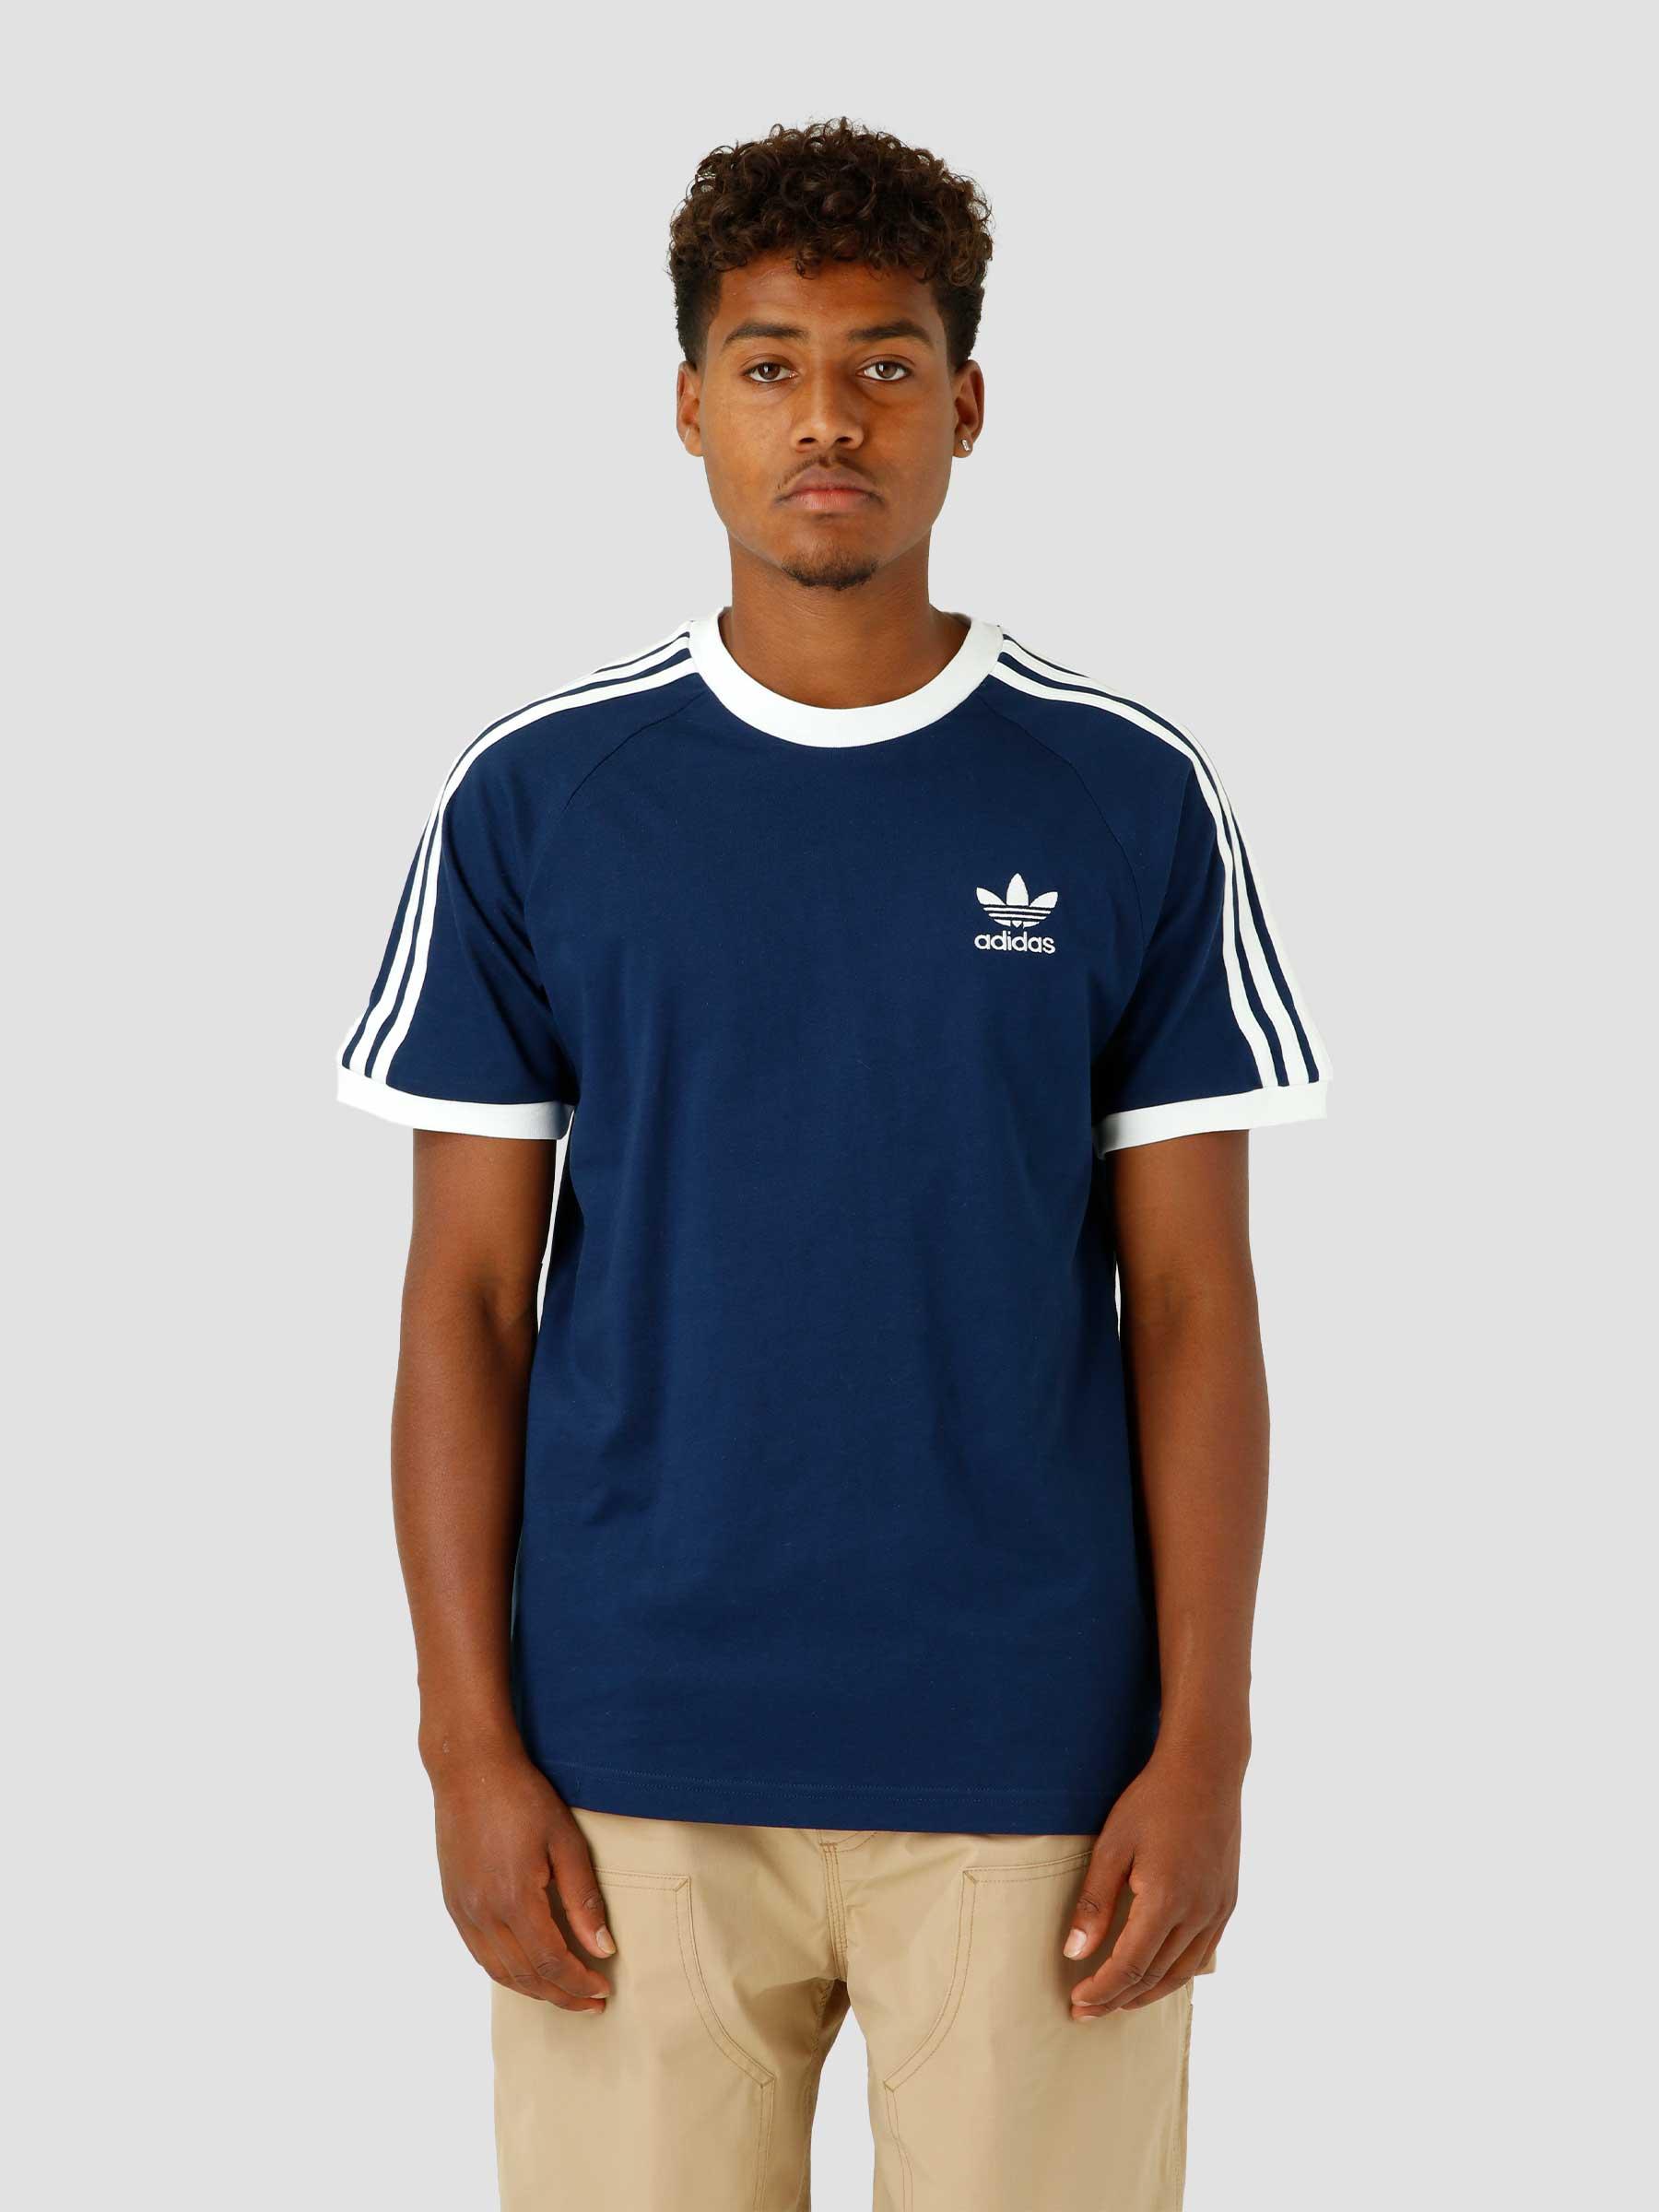 adidas 3-Stripes T-Shirt Night Indigo - Freshcotton